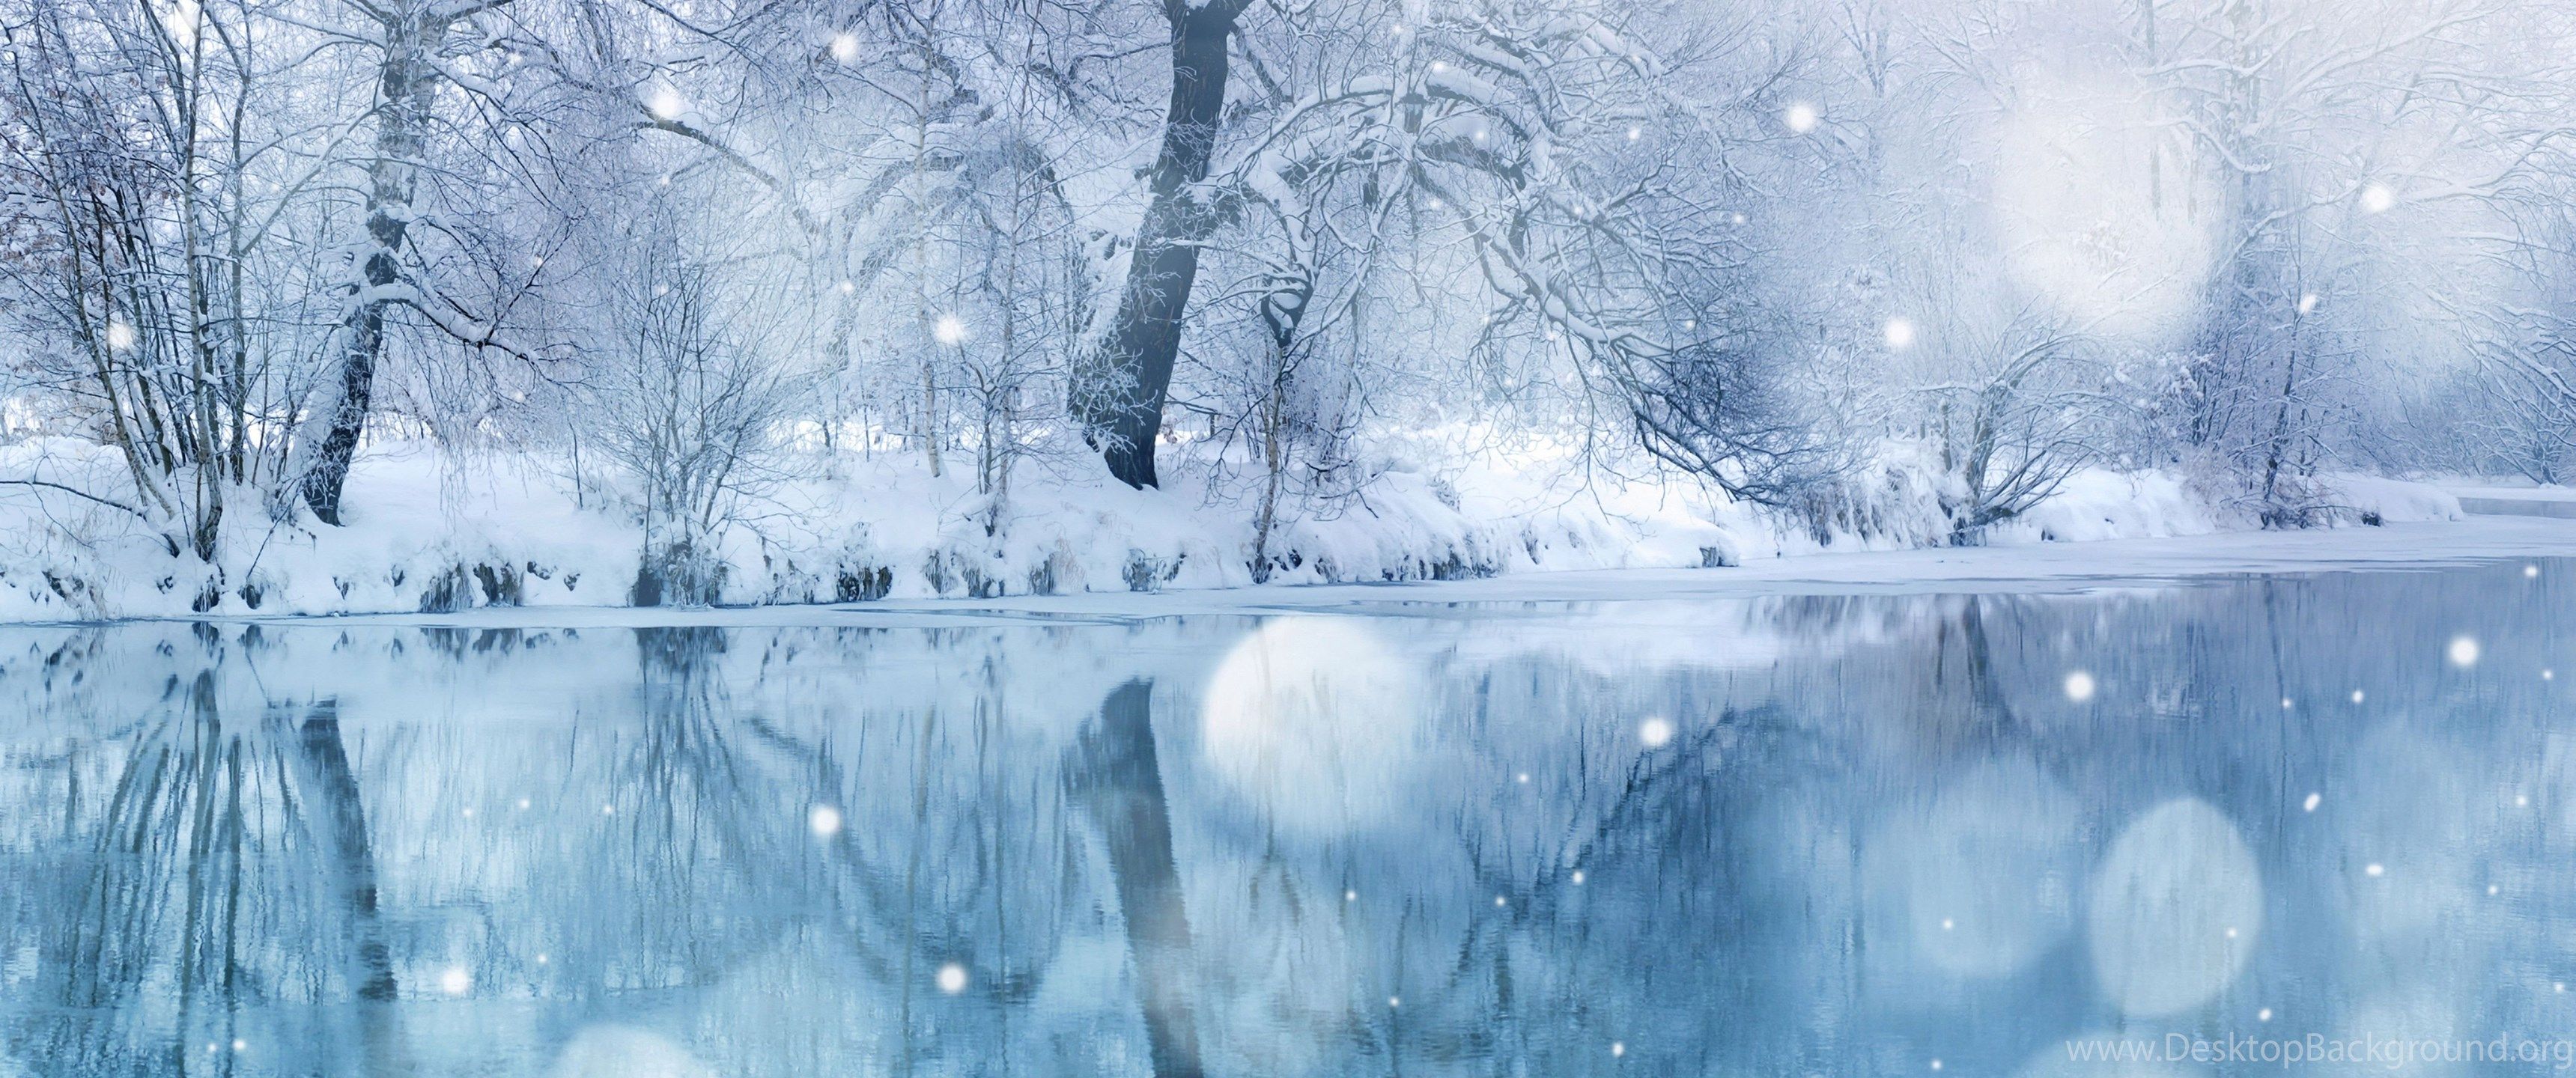 Falling Snow Wallpaper Silent Lake Widescreen Picture Winter Desktop Background